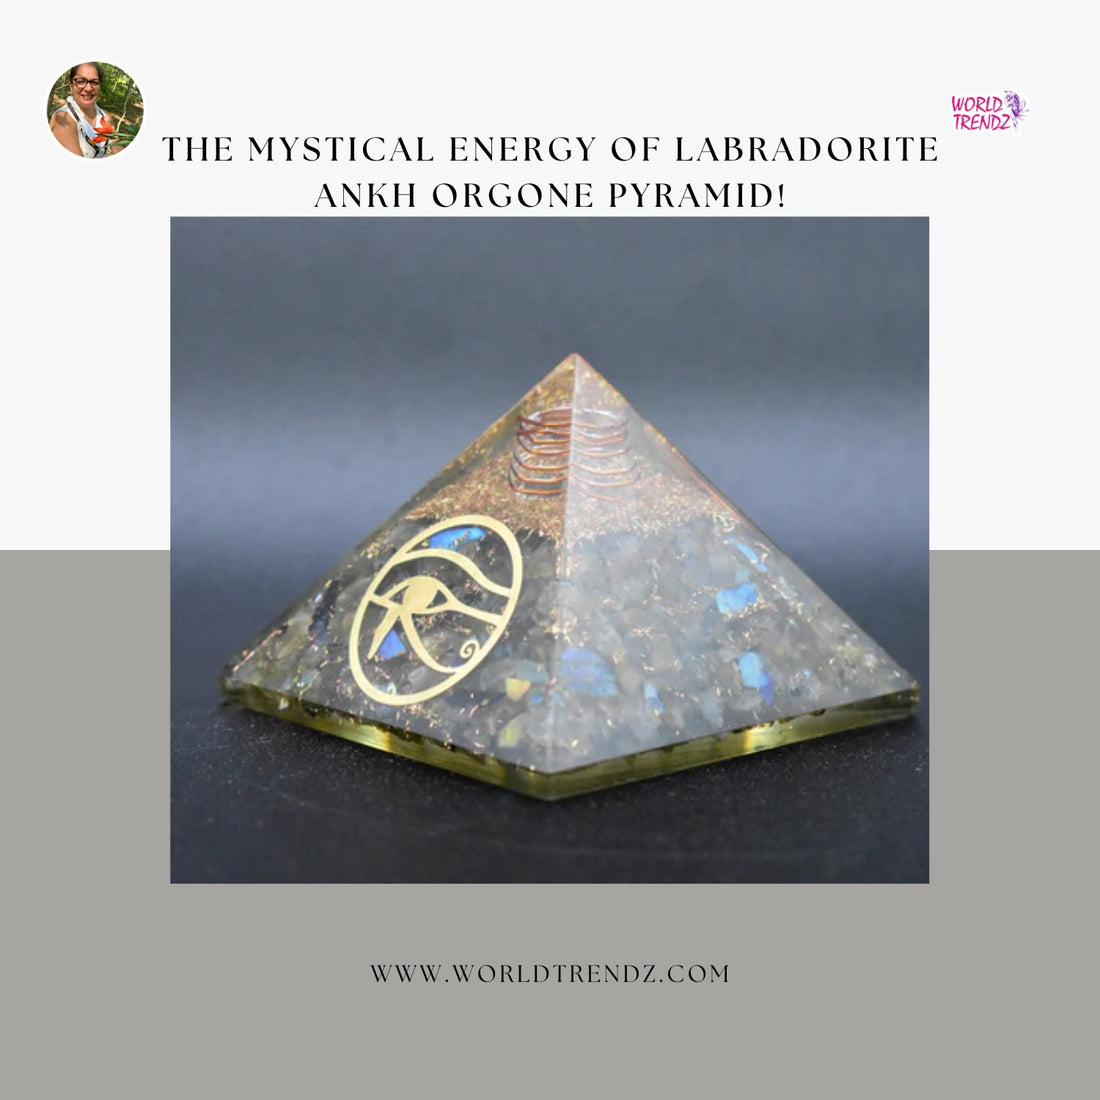 Labradorite Ankh Orgone Pyramid - Elevate Your Spiritual Energy Today!